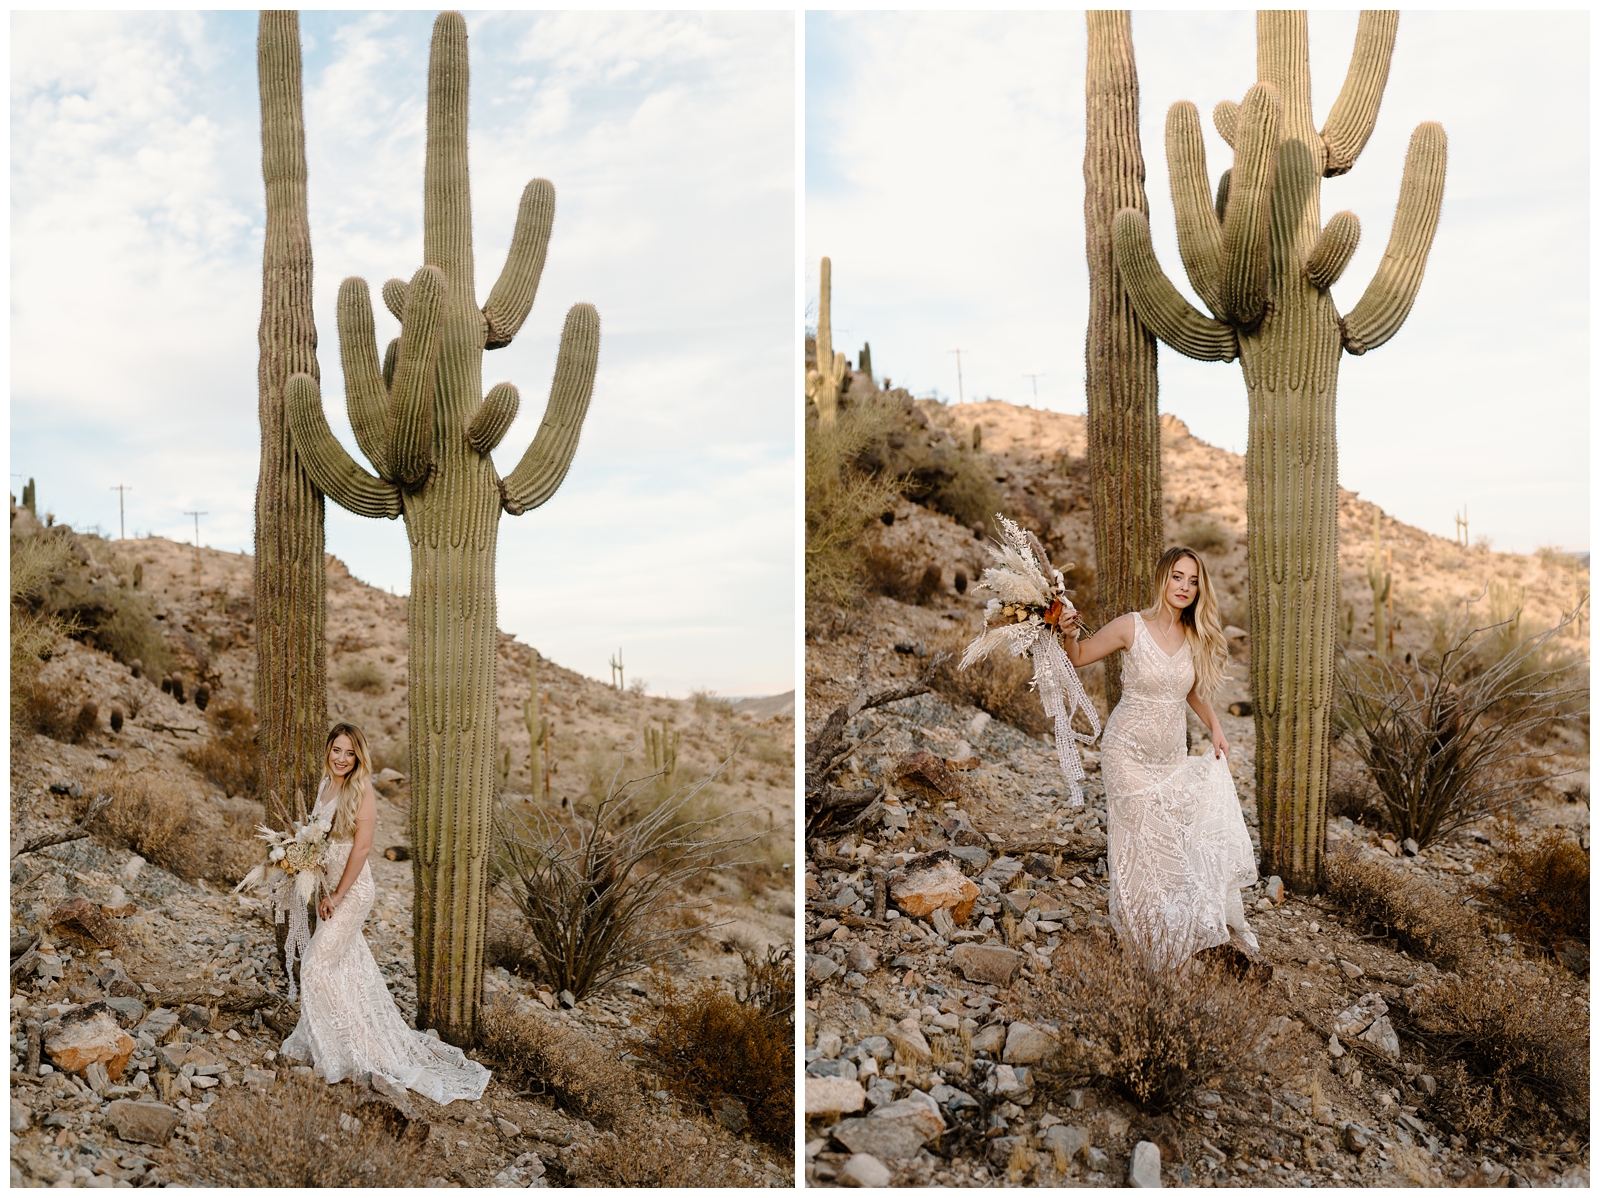 Bridal portraits with cacti in the Arizona desert near Phoenix, AZ by adventurous elopement photographer